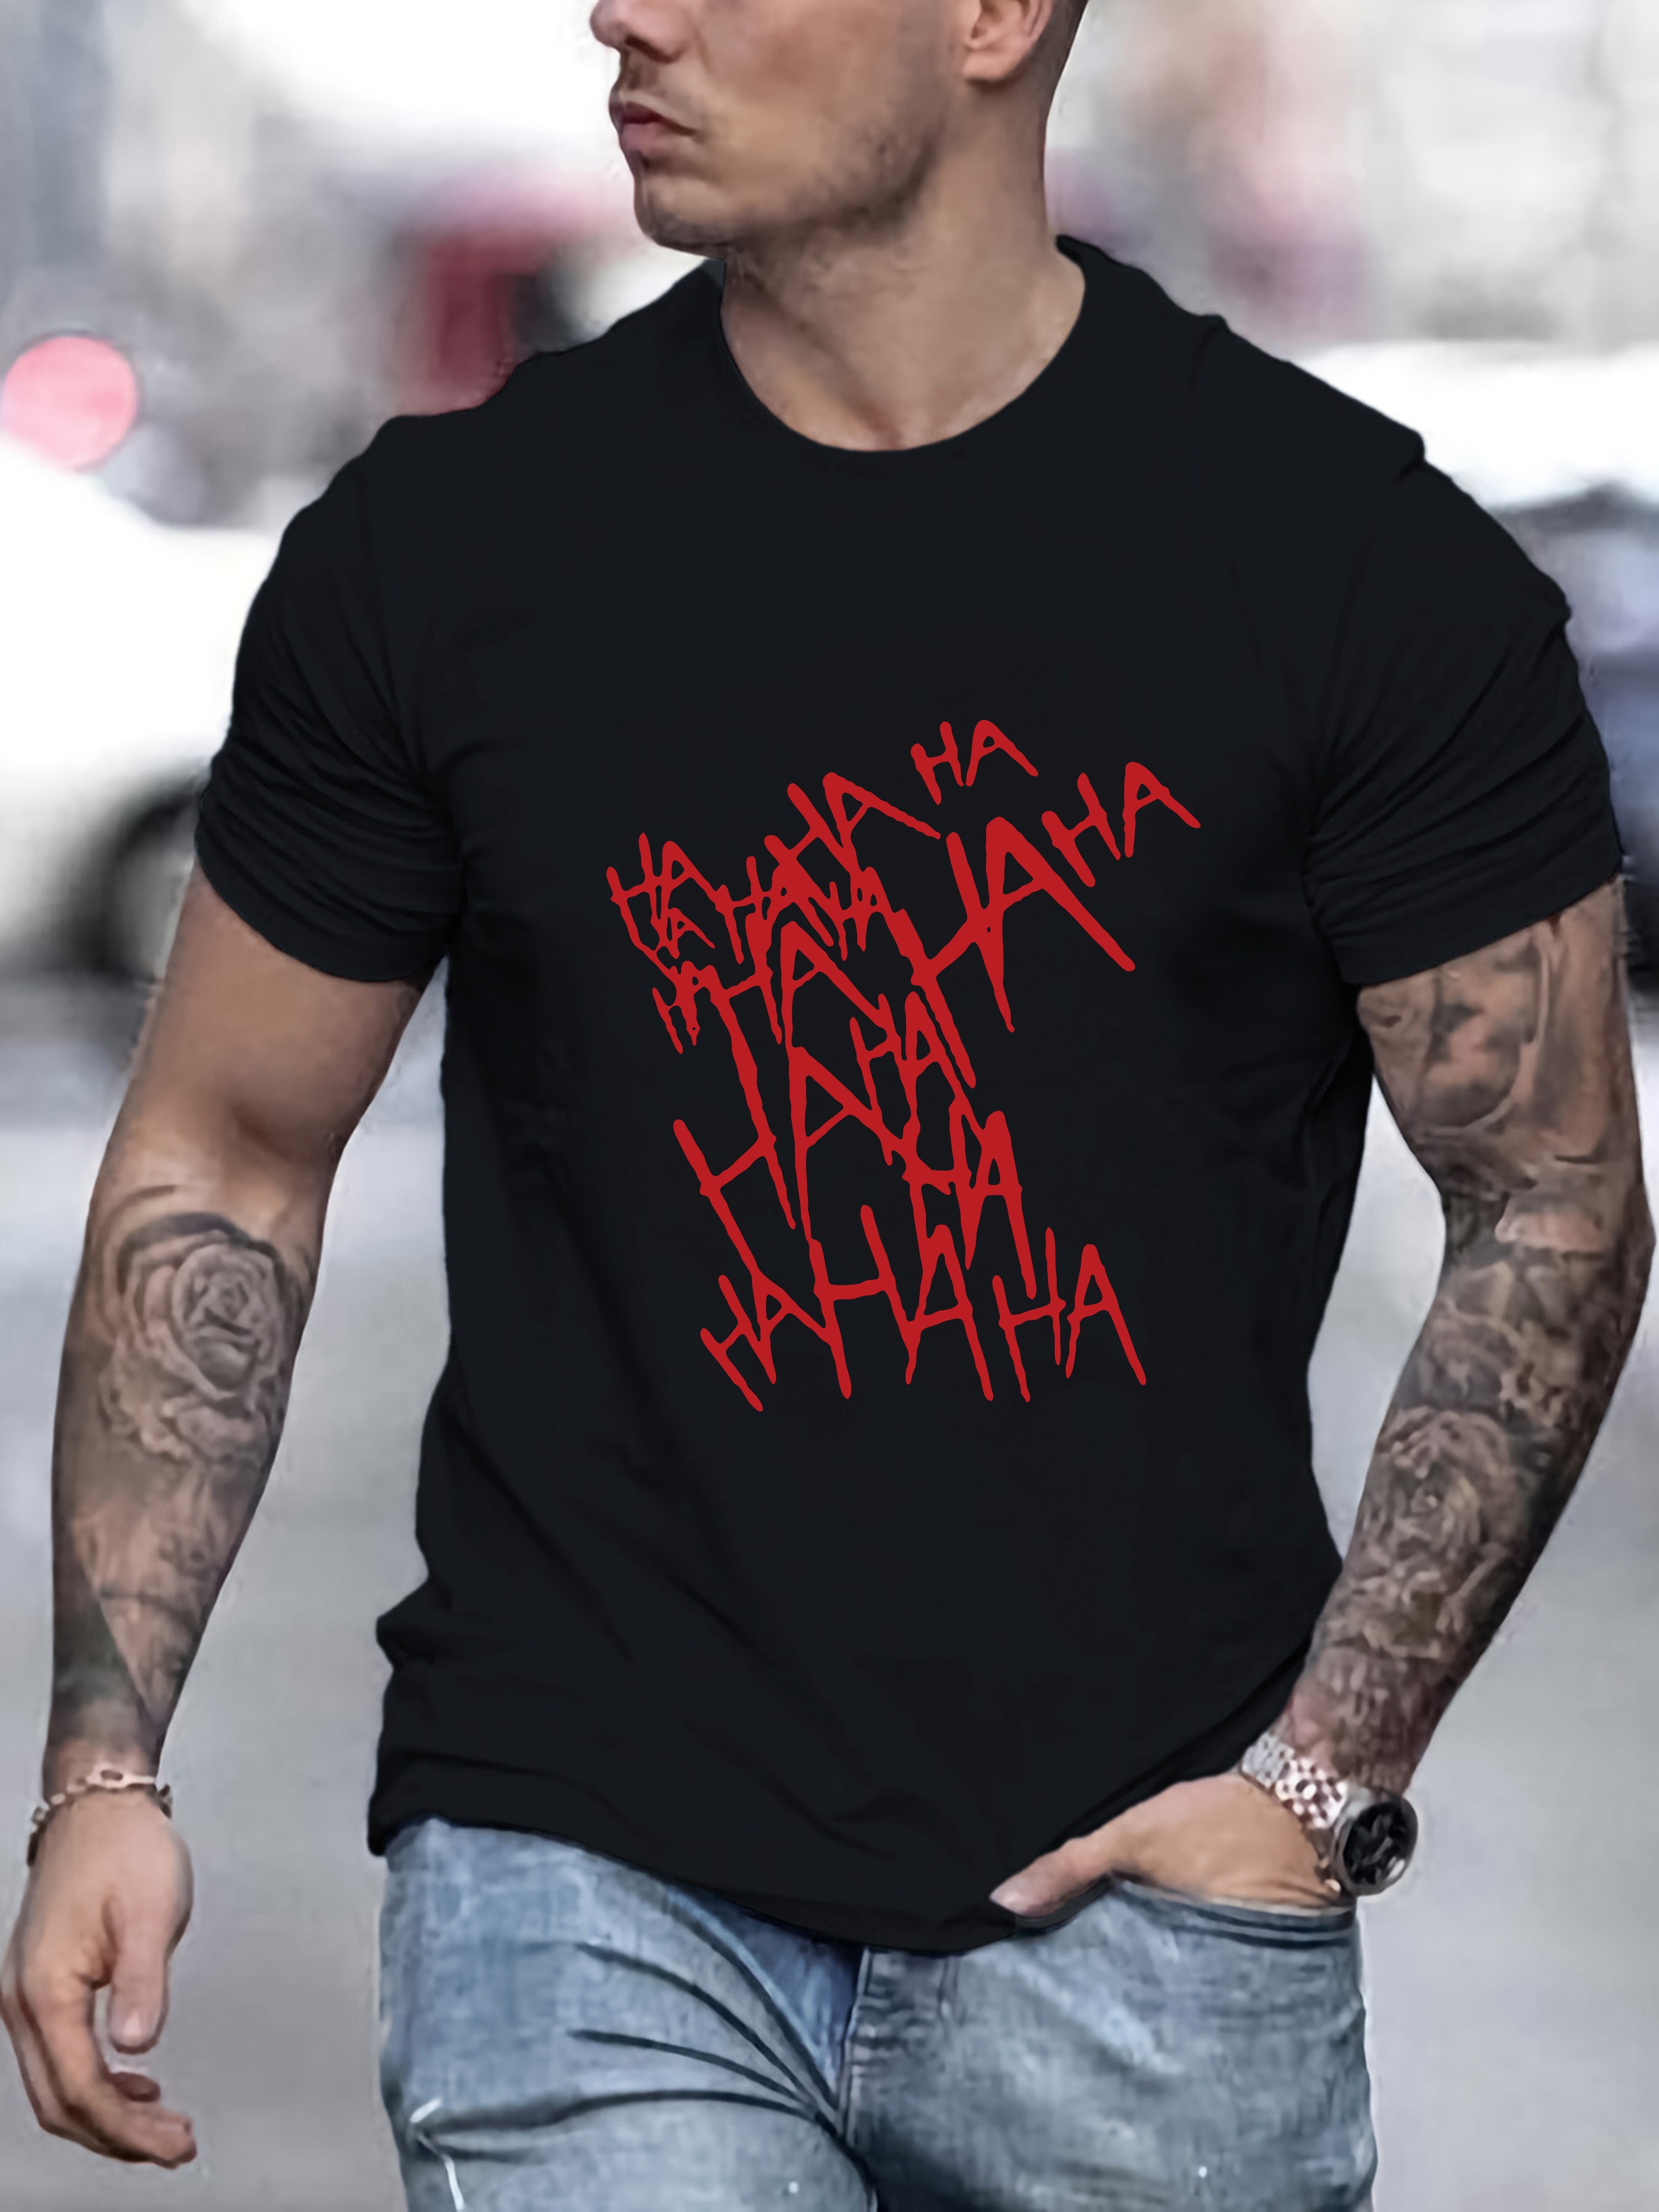 hahahahaha' Men's T-Shirt